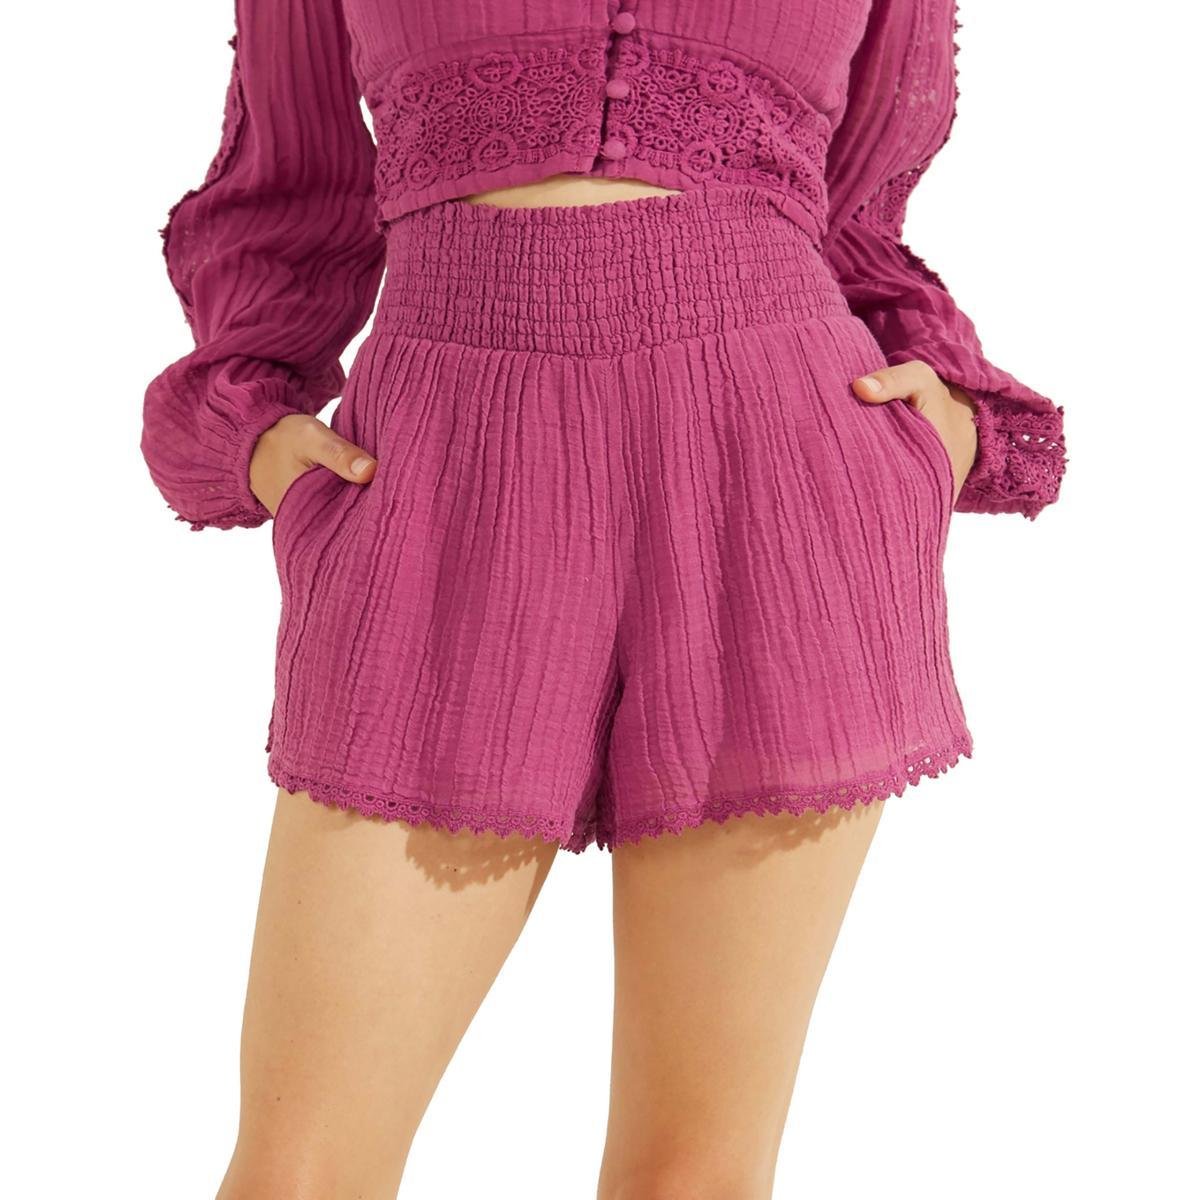 Guess Womens Abigail Smocked Crochet Trim High-Waist Shorts by GUESS